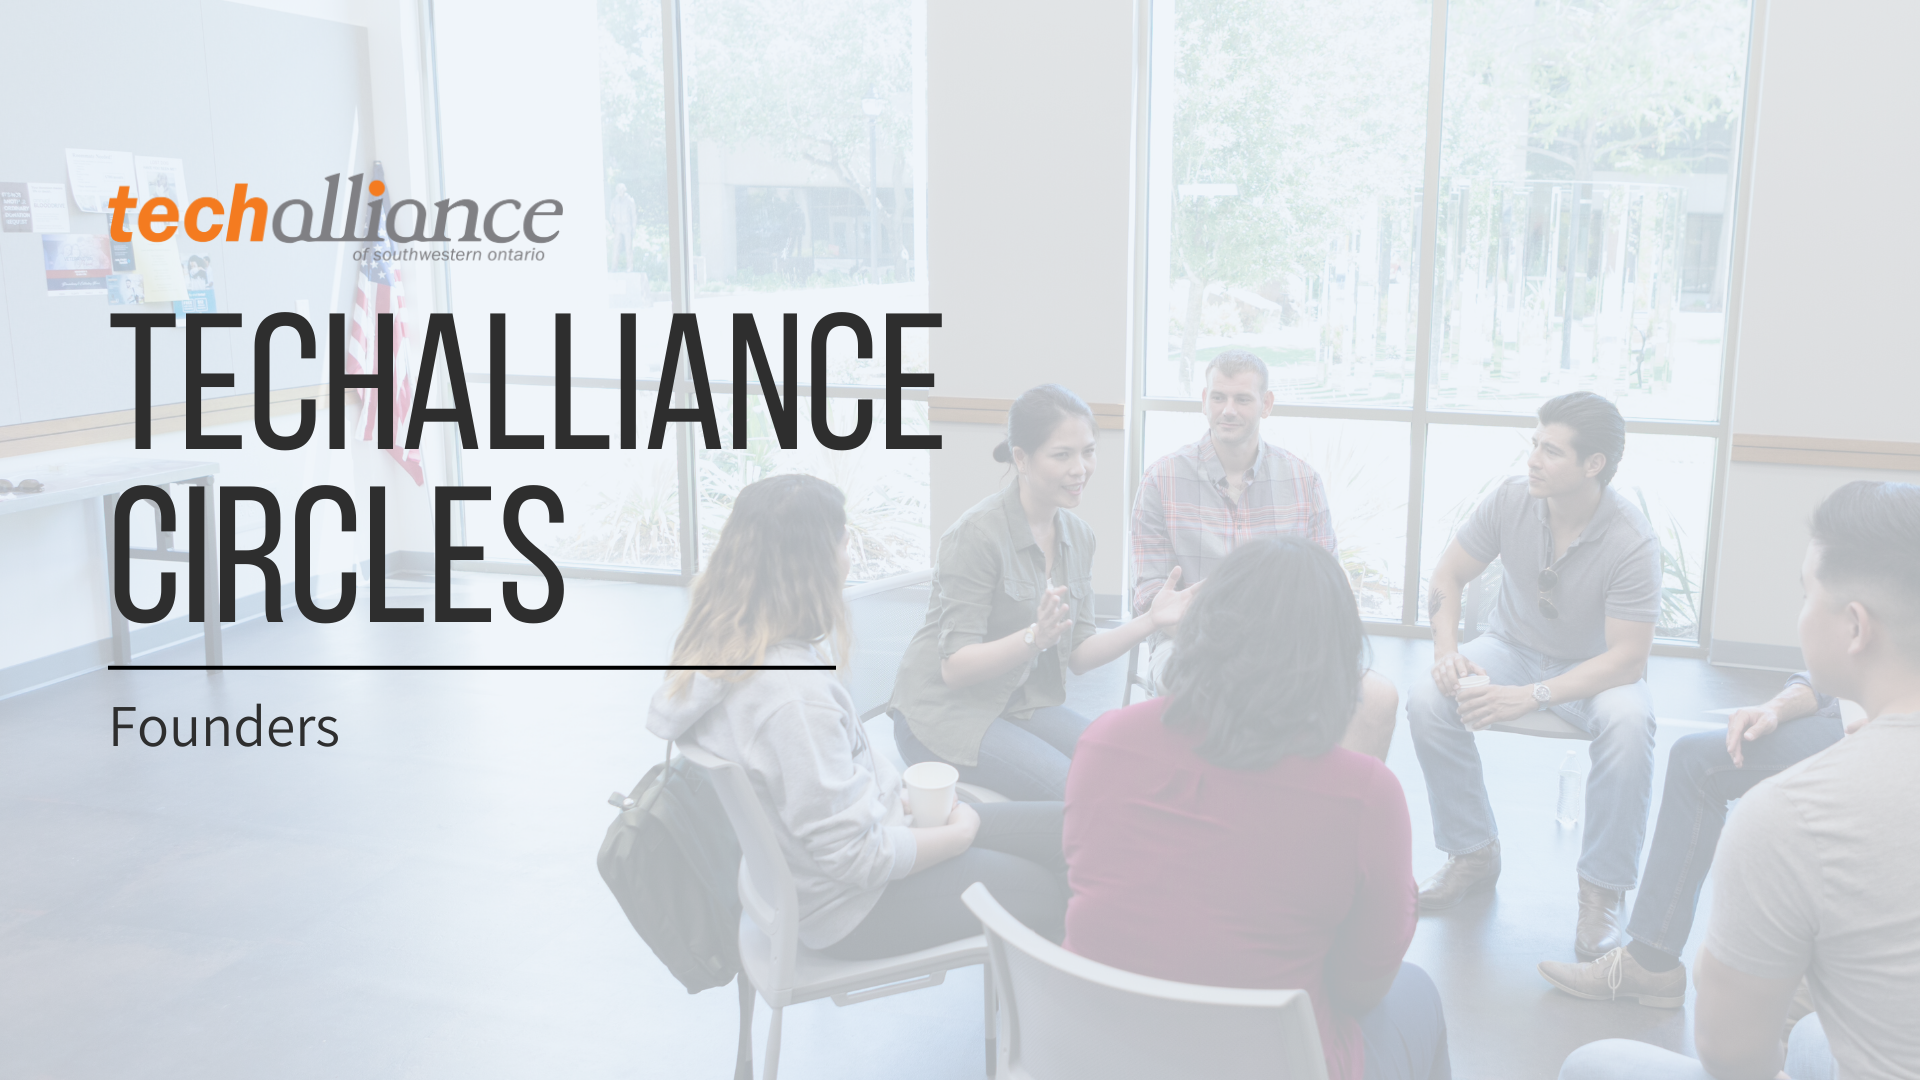 tech alliance techchallenge circles founders.